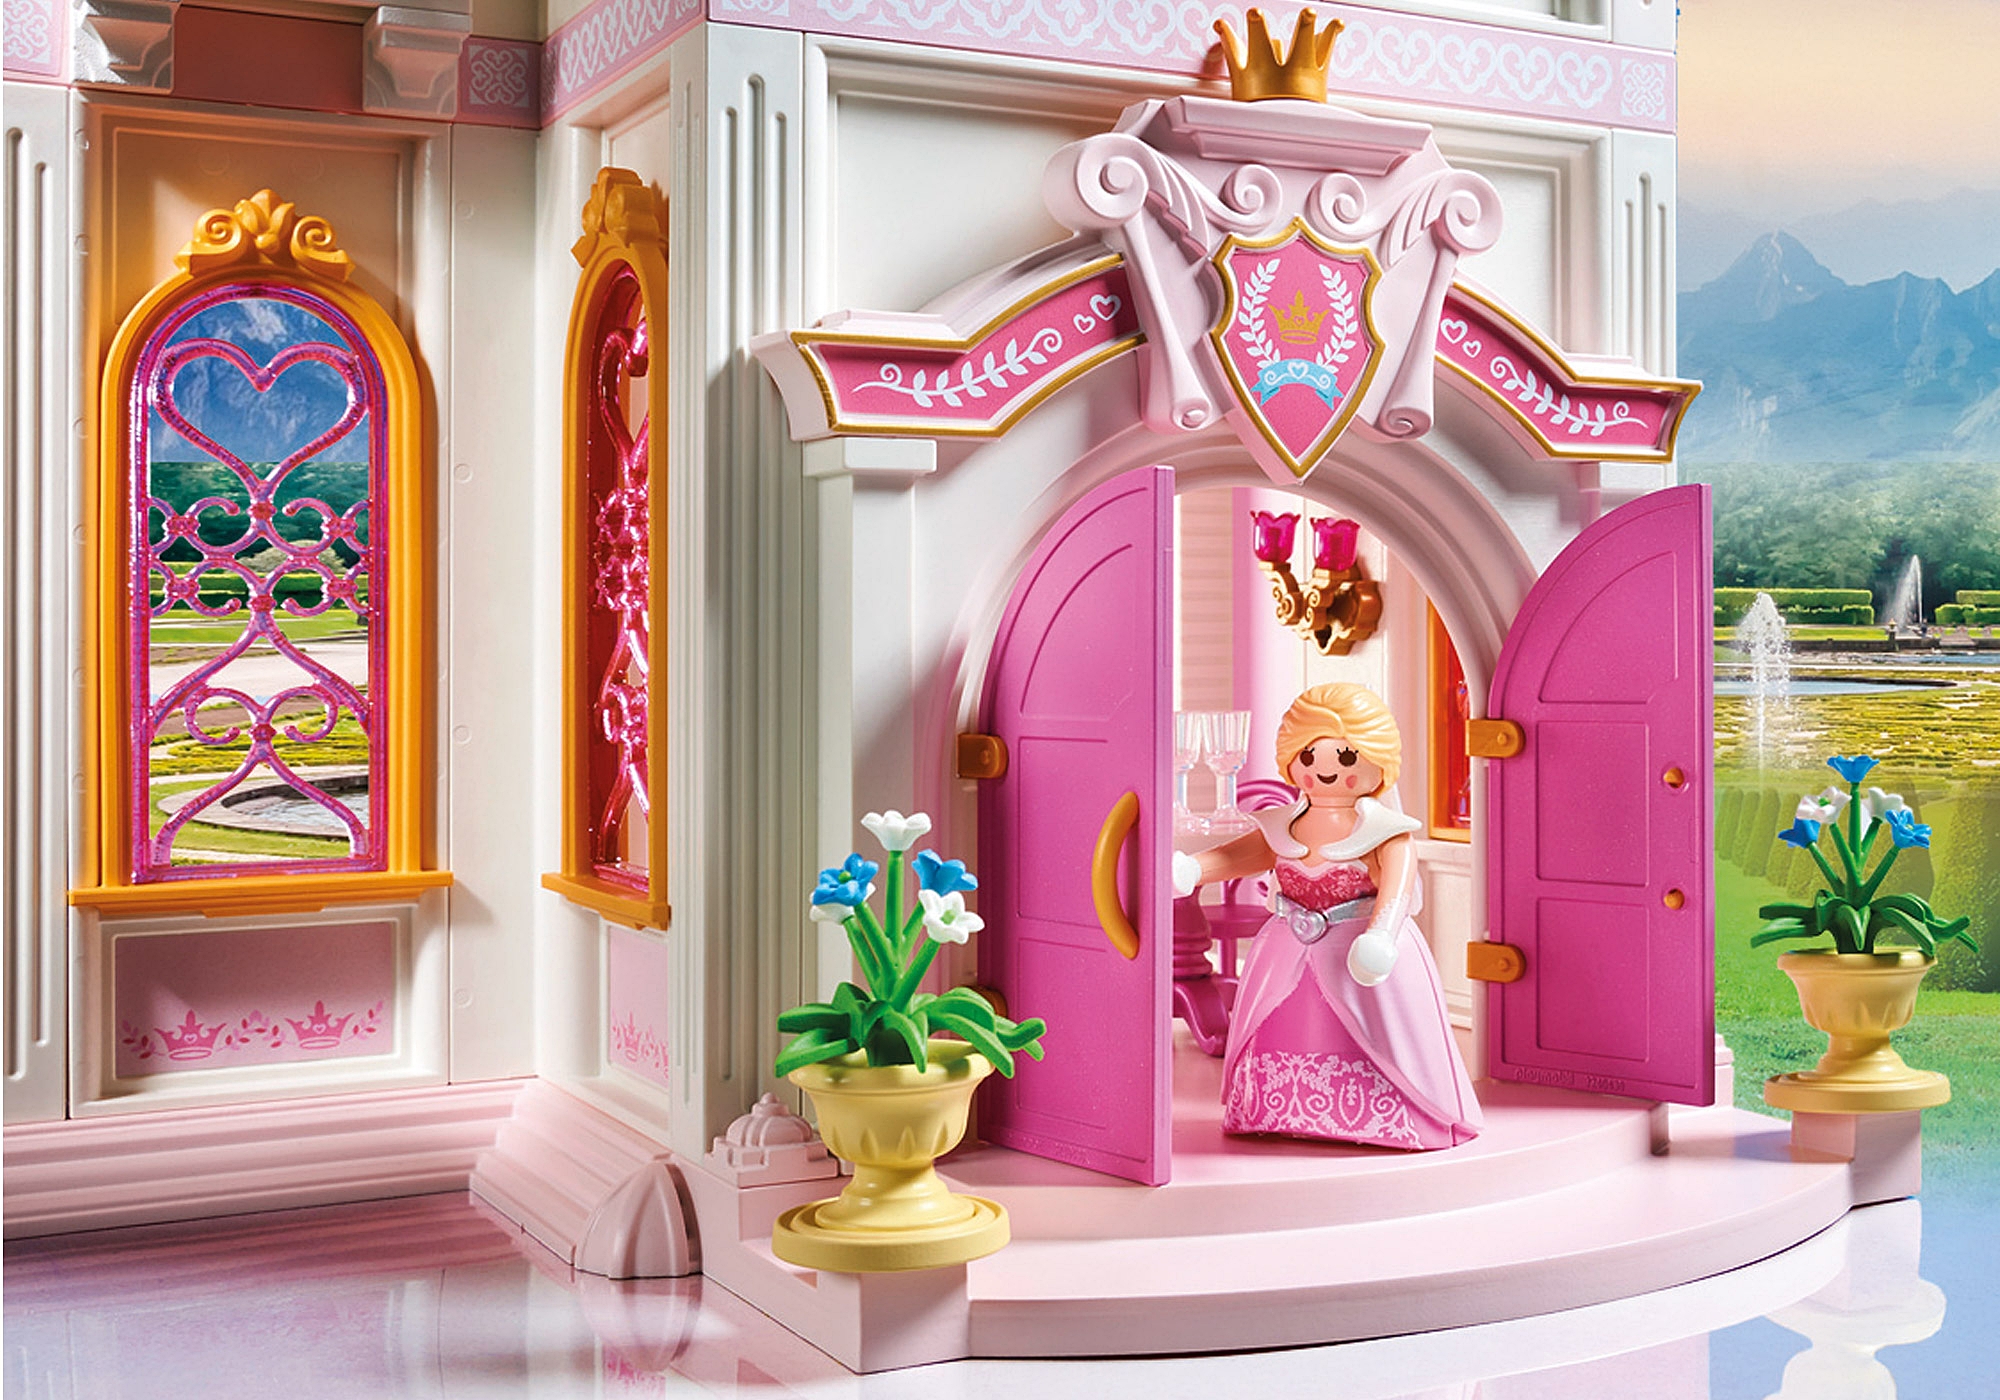 PLAYMOBIL Princess Fantasy Castle 